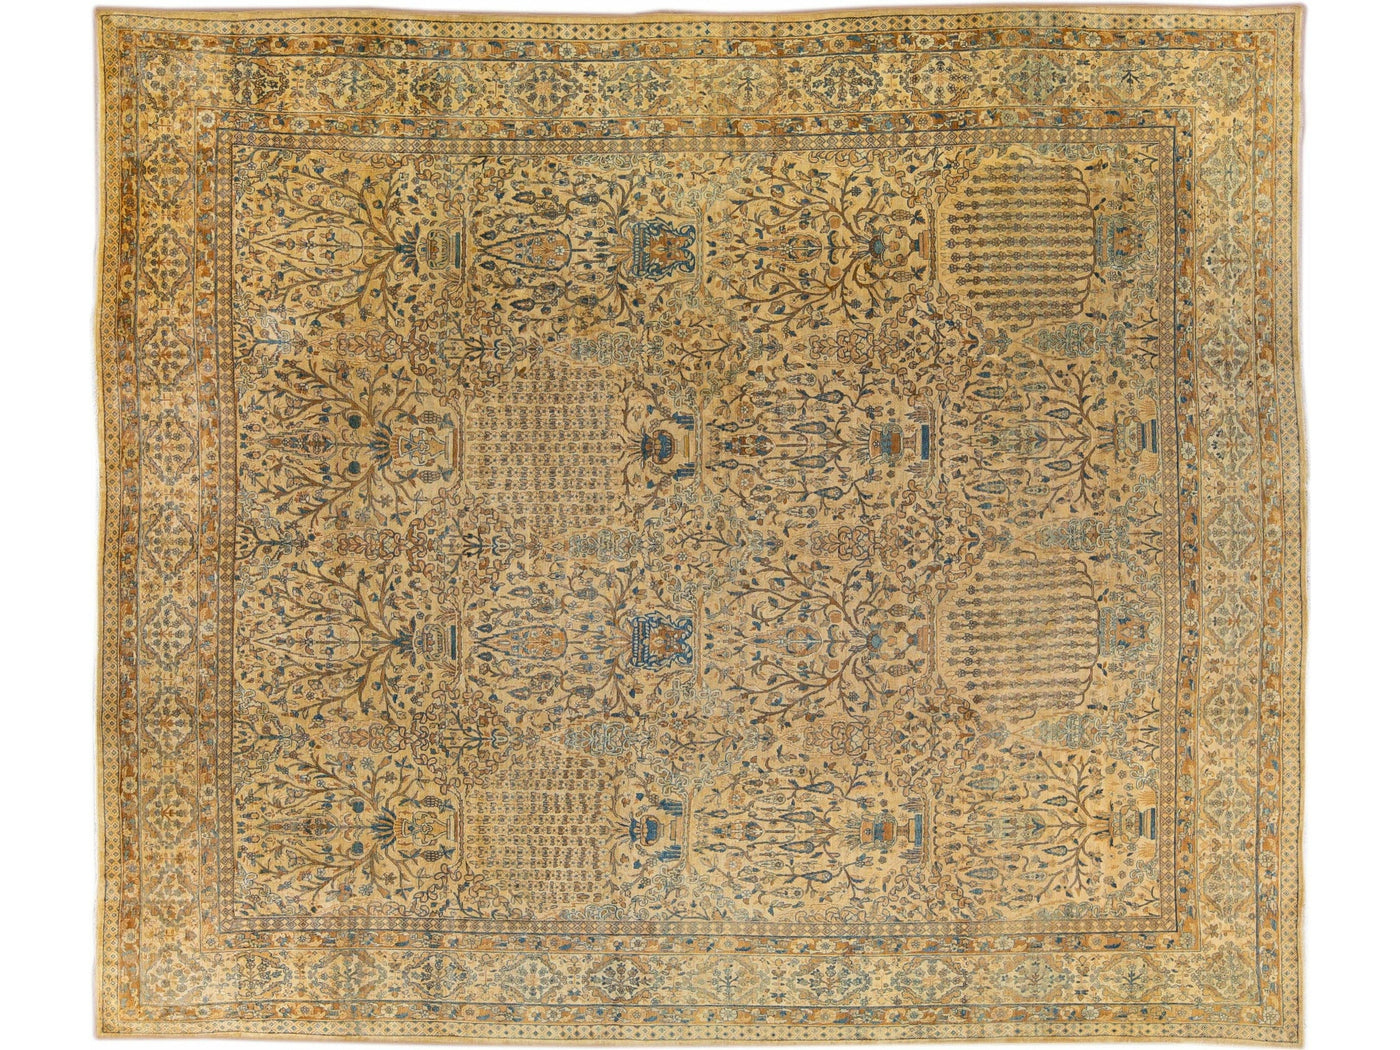 Antique Persian Kerman Handmade All-Over Floral Goldenrod Wool Rug